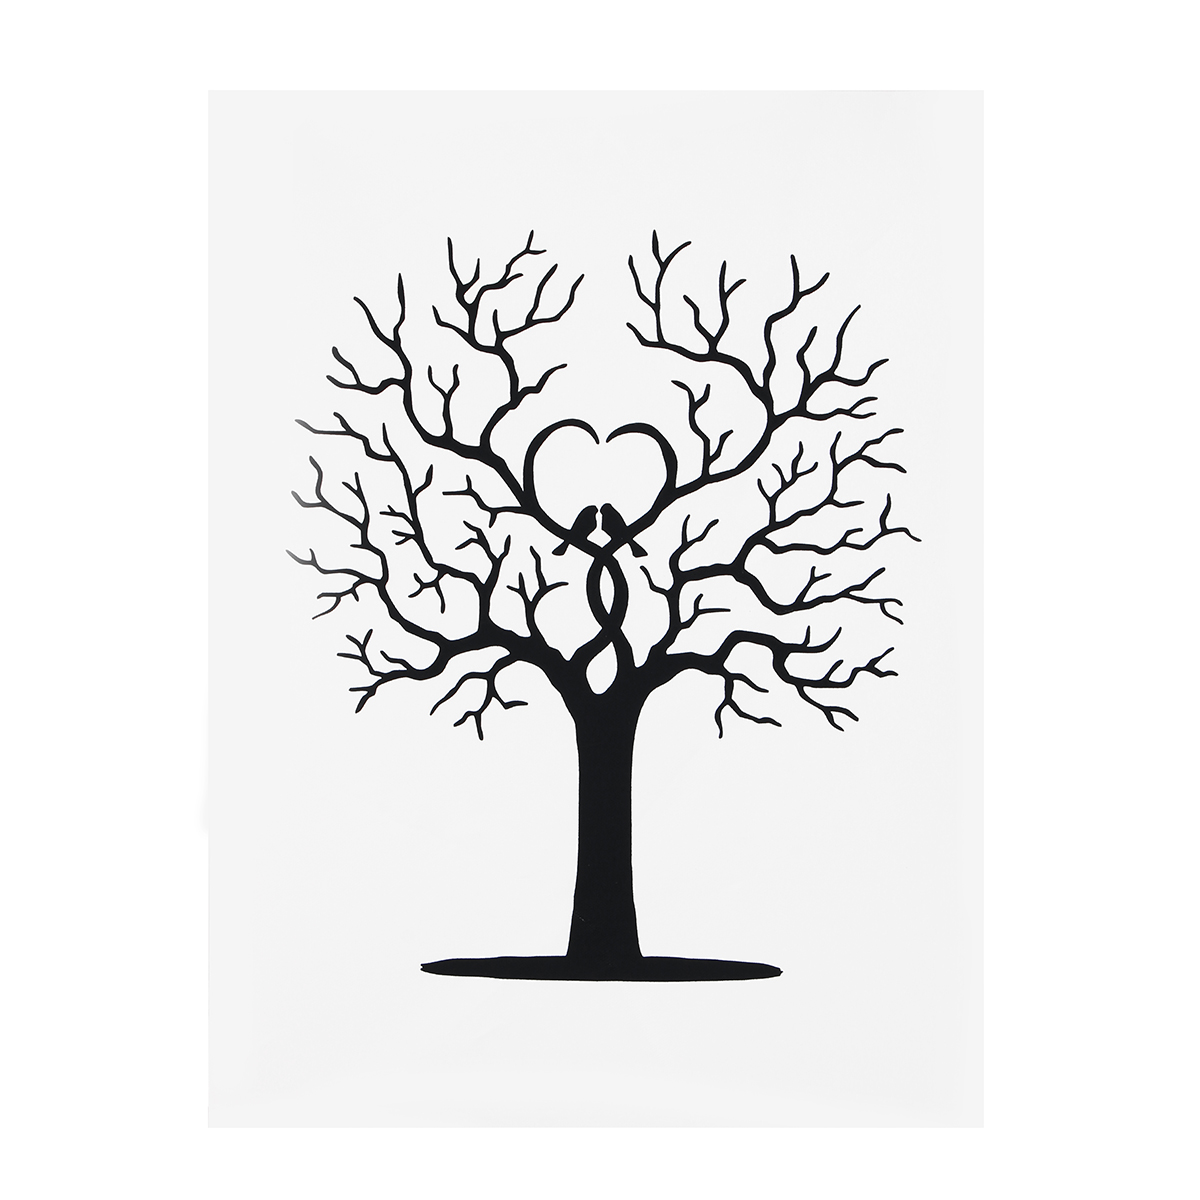 Fingerprint-Thumbprint-DIY-Tree-Wedding-Signature-Sign-Guest-Book-Canvas-Sign-in-Tree-Decorations-1436199-1